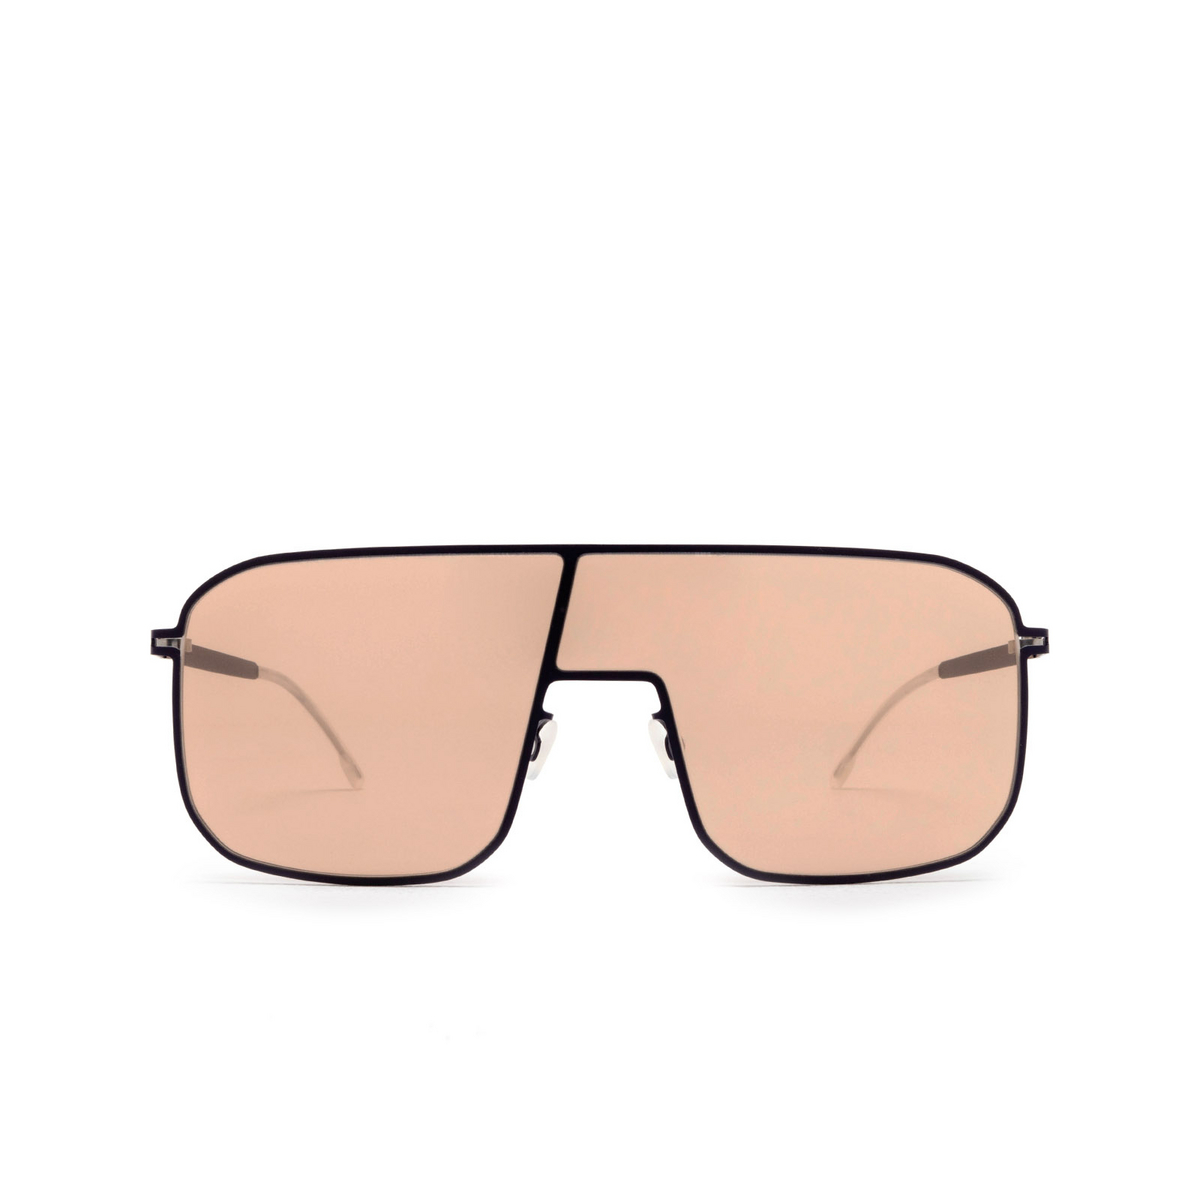 Mykita® Aviator Sunglasses: STUDIO12.2 color 473 Mulberry - front view